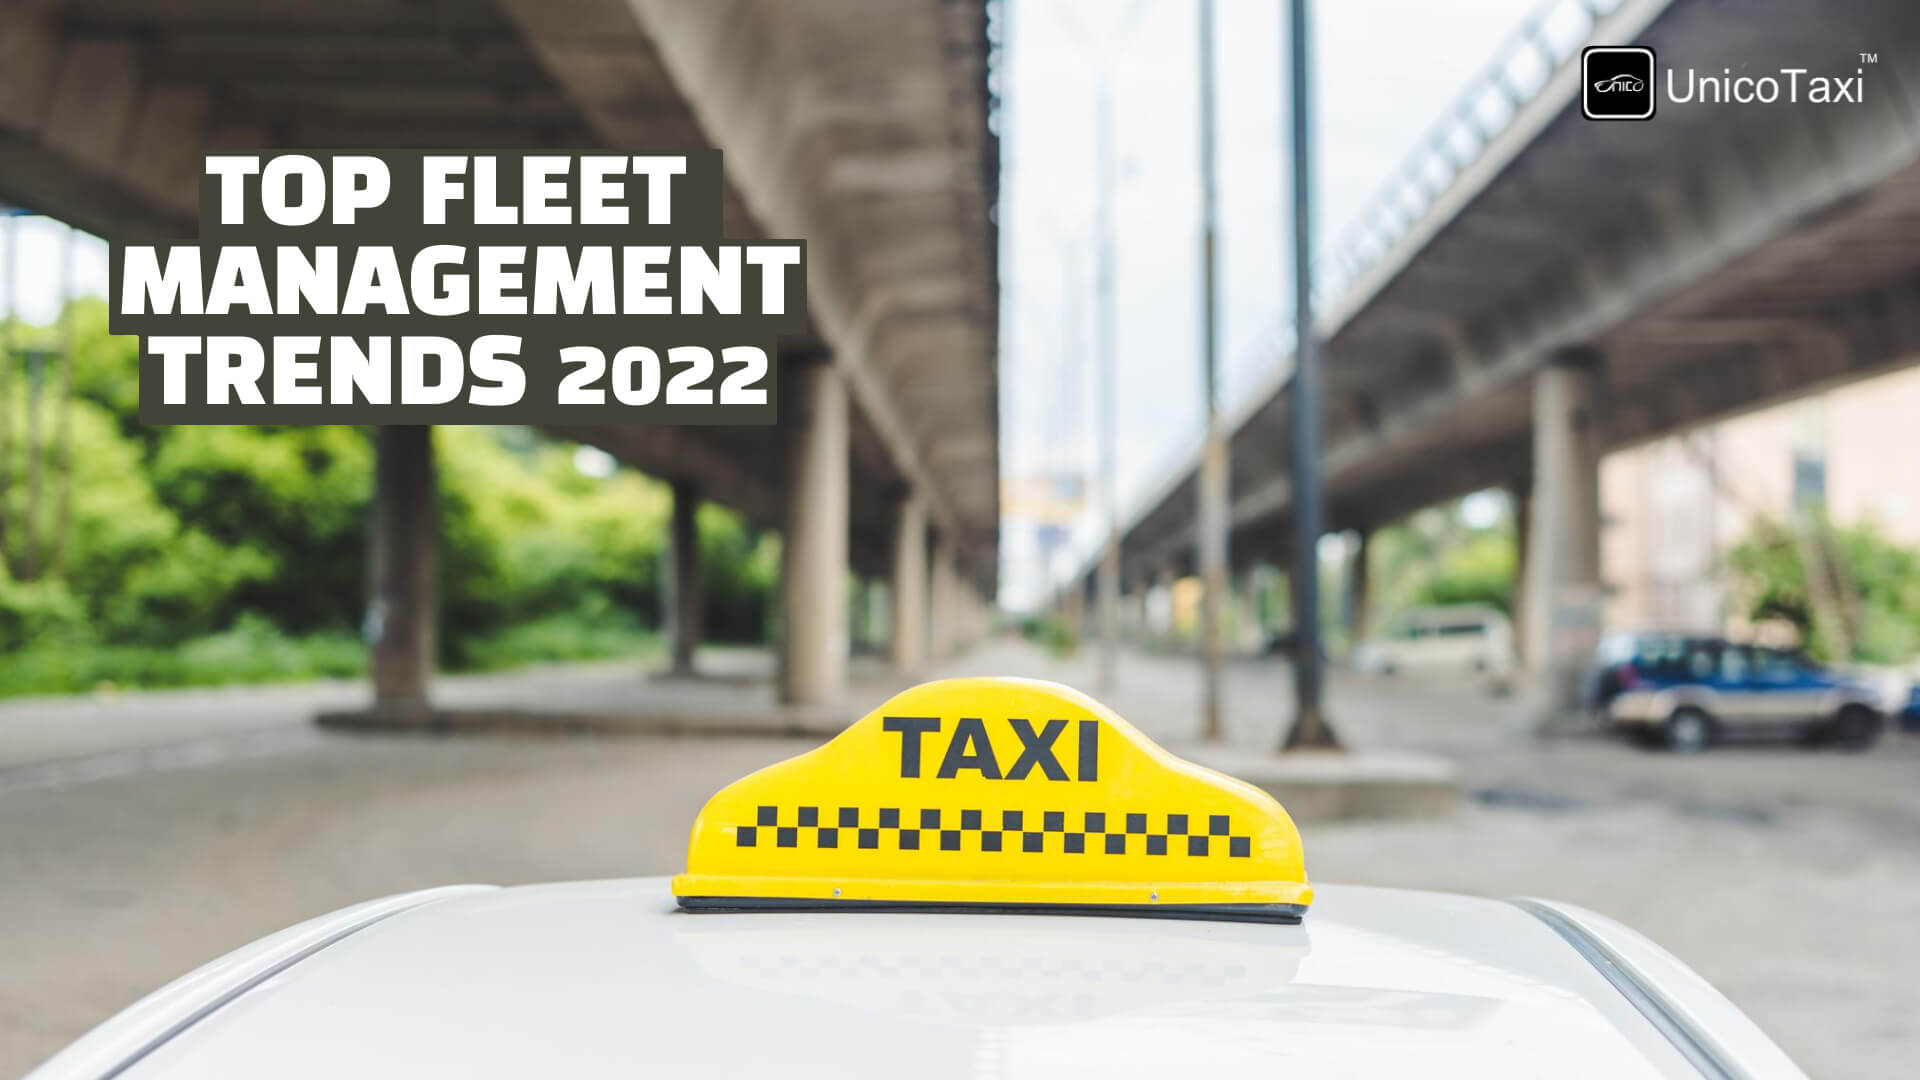 Top Fleet Management Trends to Follow in 2022